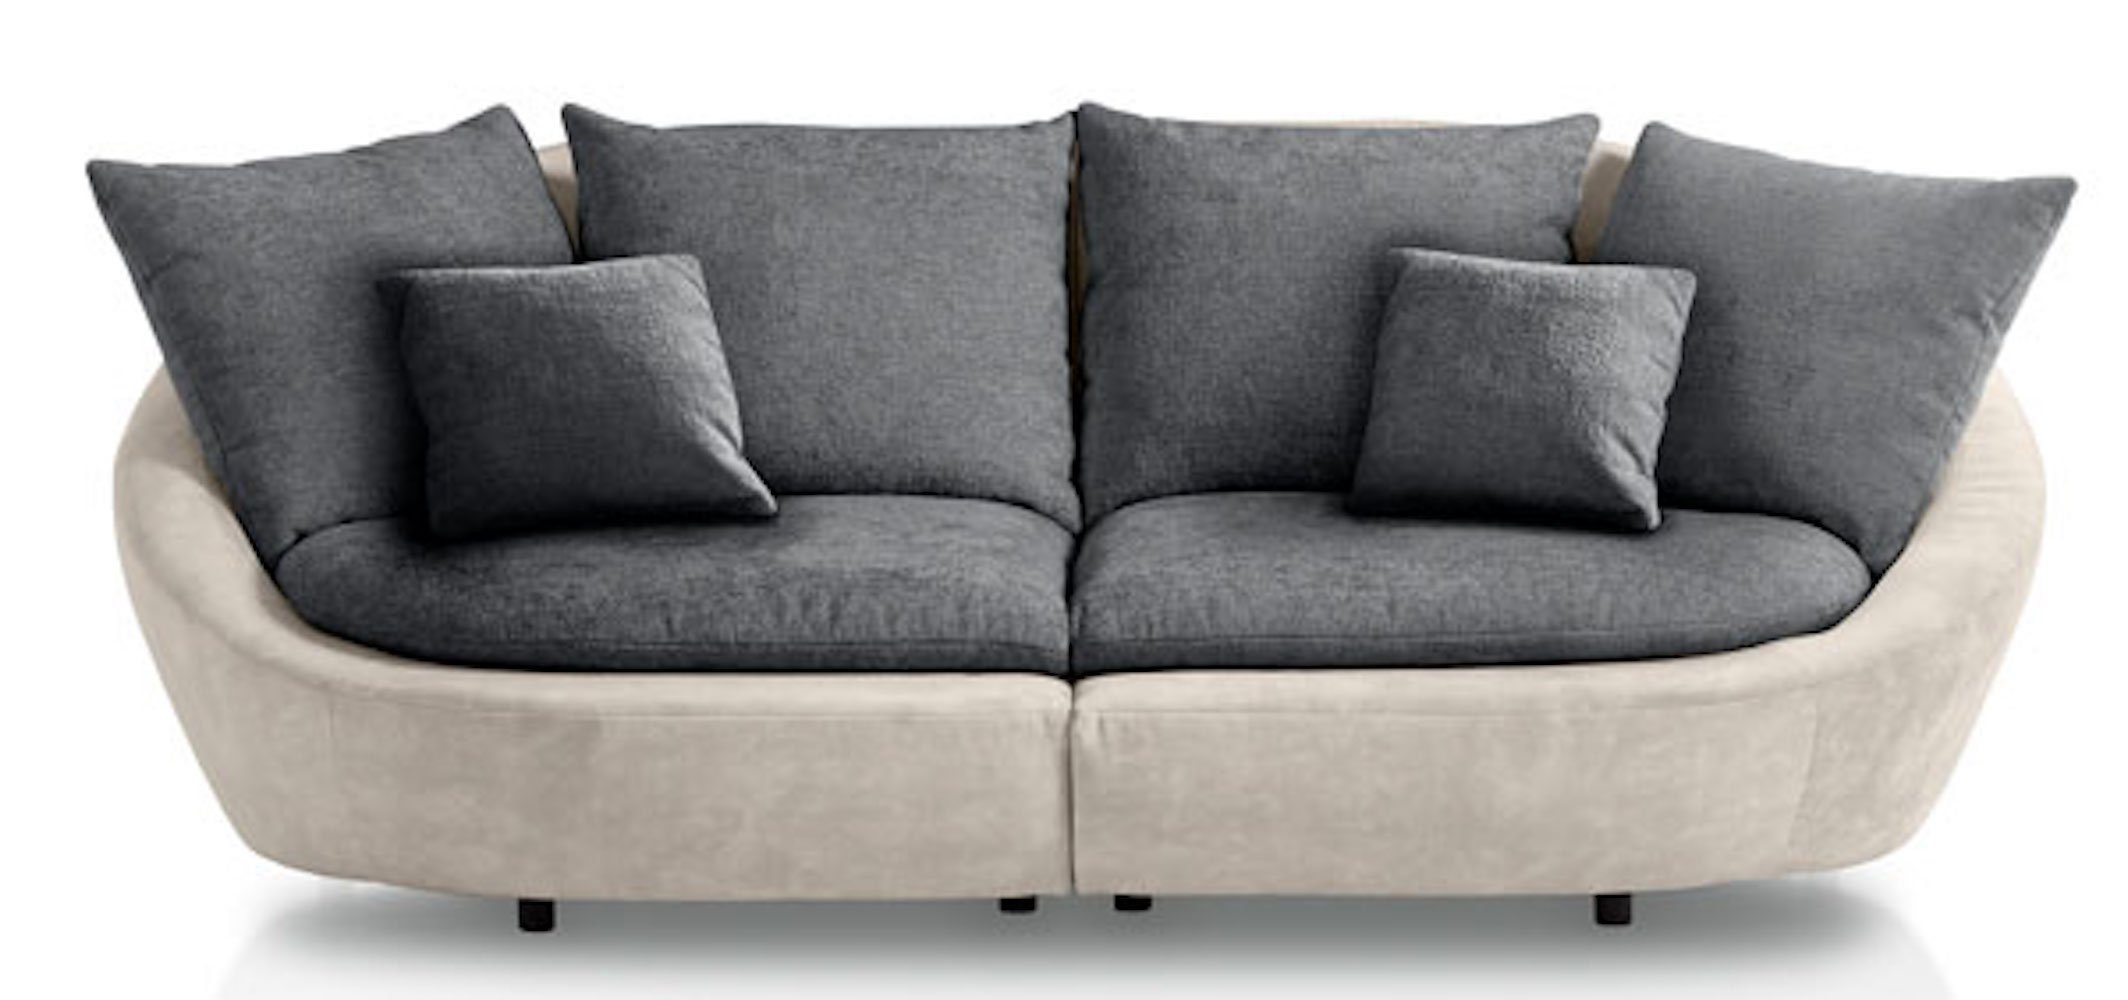 Big-Sofa dunkelgrau Feldmann-Wohnen Kissen 237x129x87cm Moroni, mit / cremeweiß